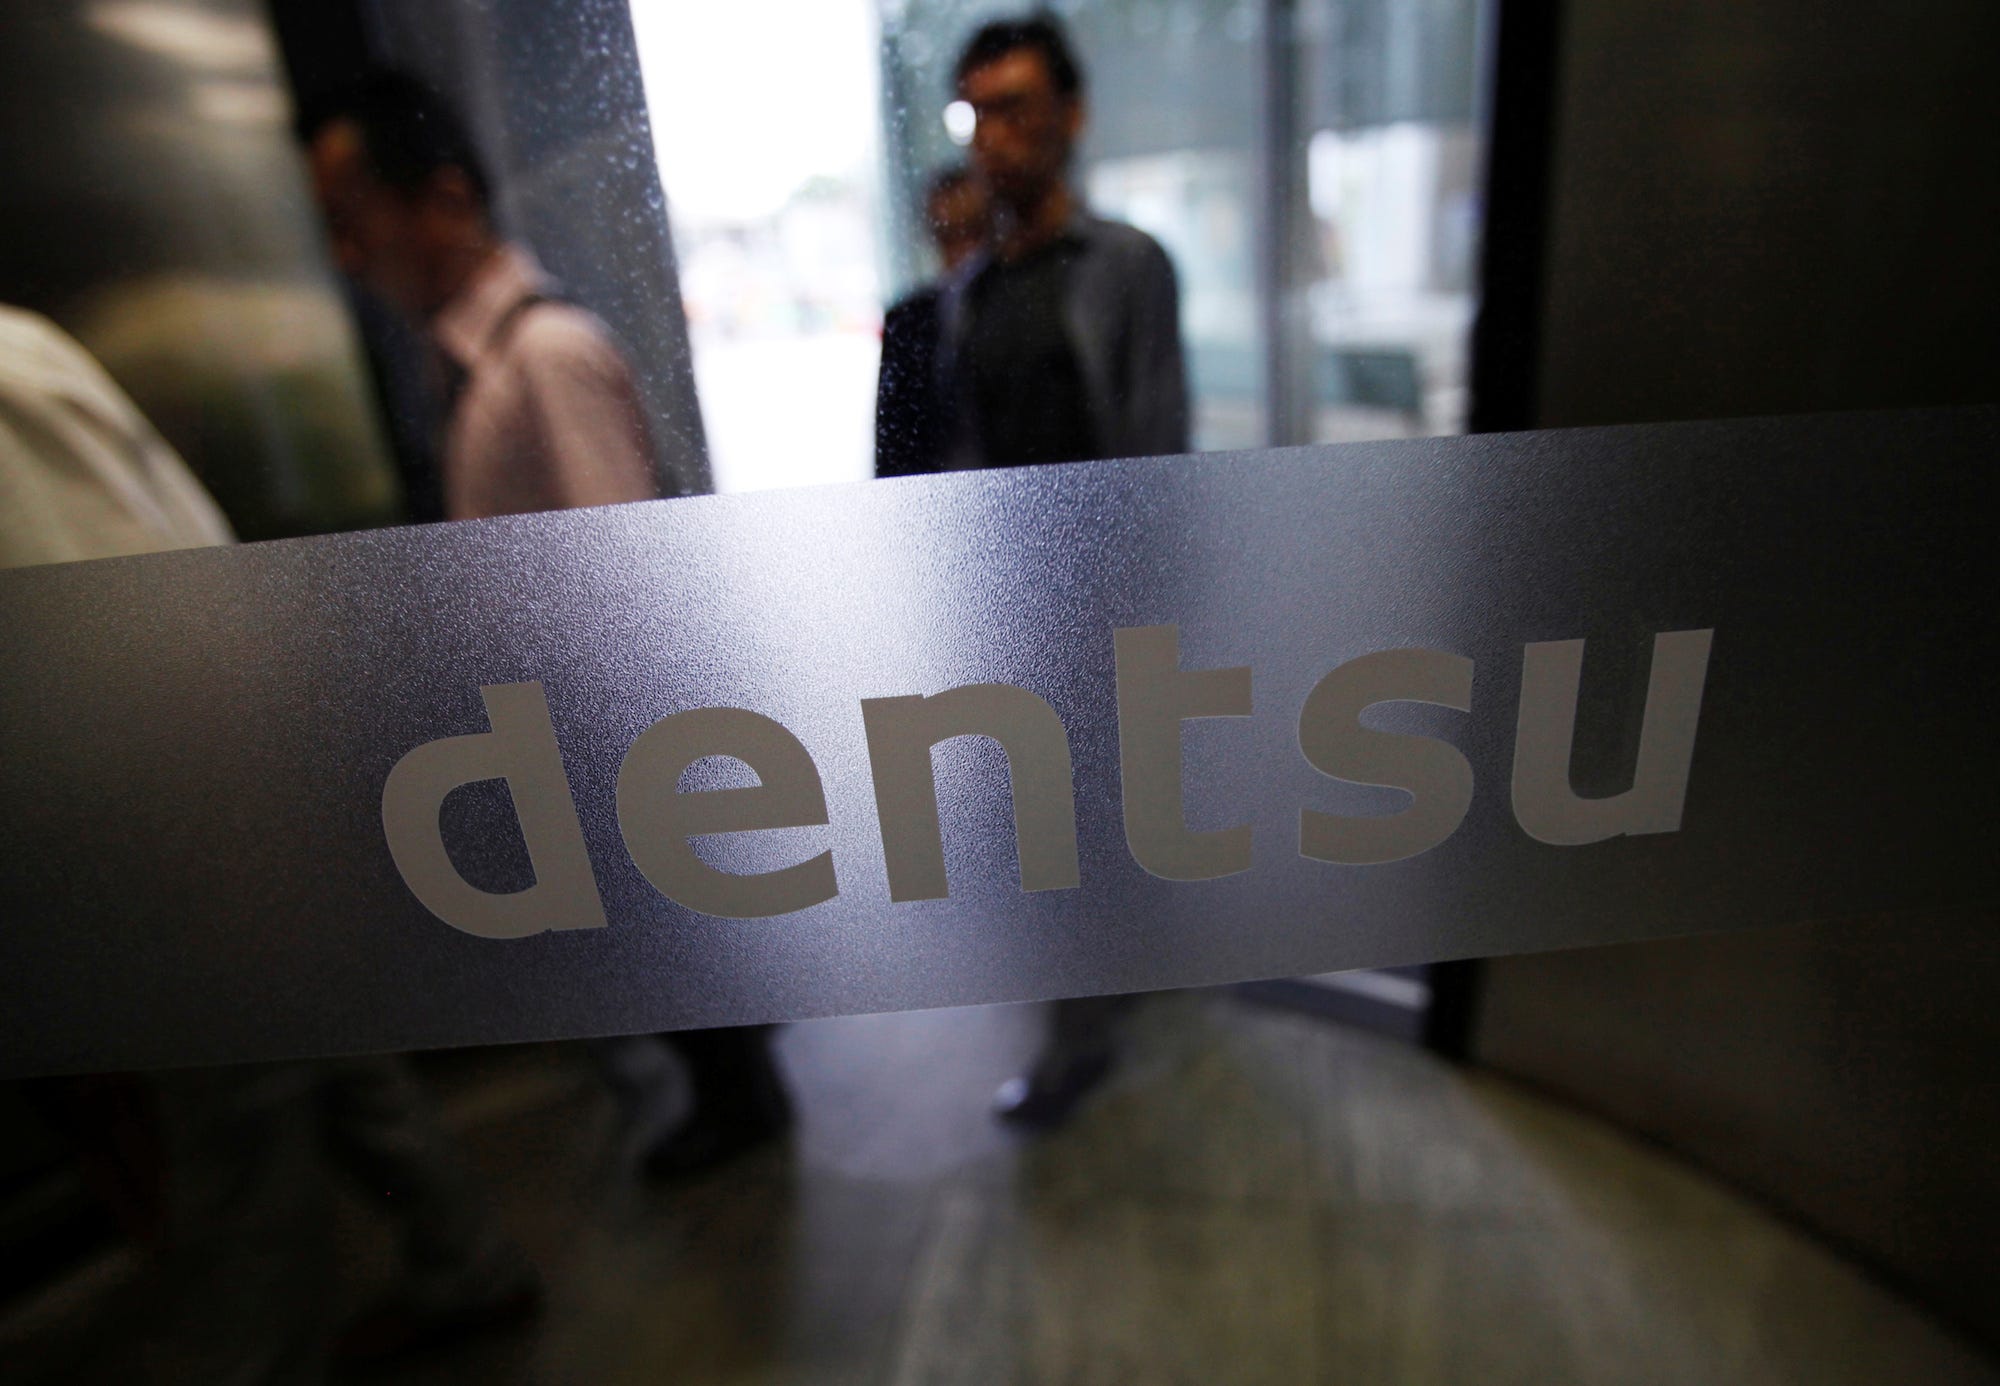 Dentsu Inc. – Minato City, Tokyo, $9.6 billion